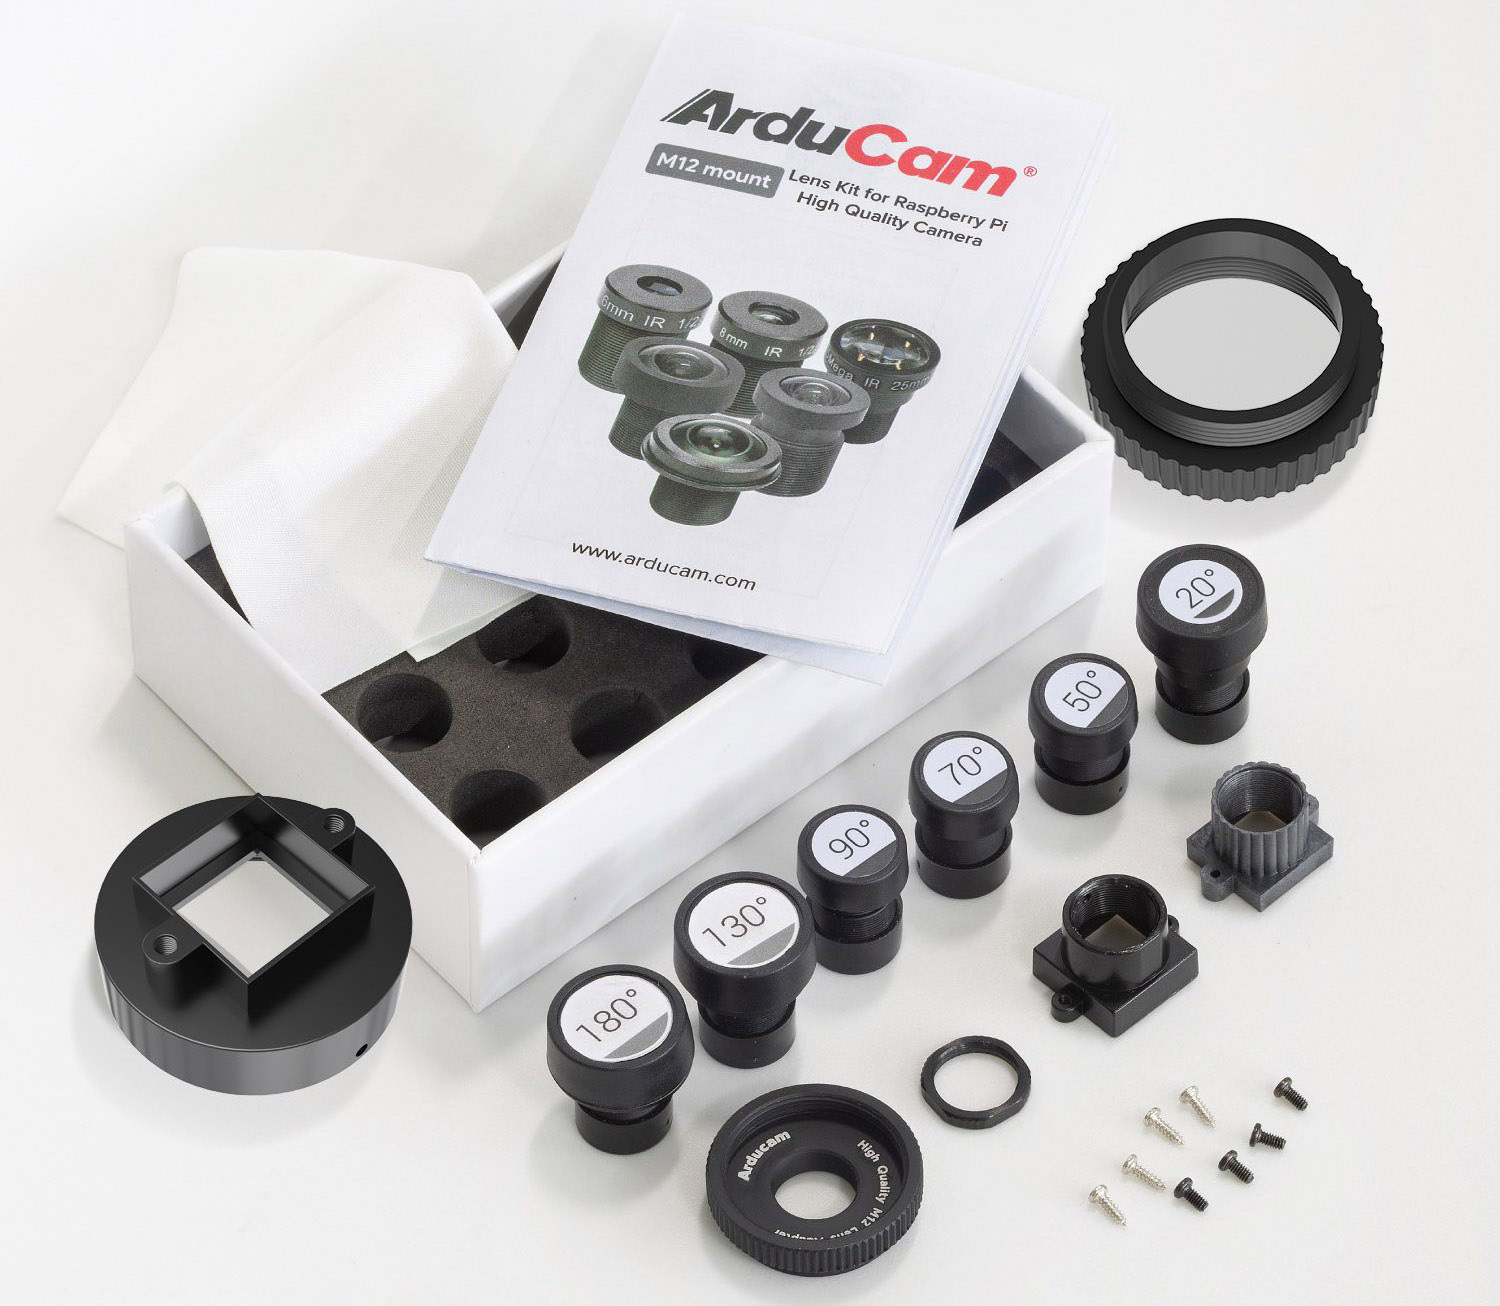 ArduCam M12 Lens Kit for HQ Camera 20-180deg (6pcs) - Click to Enlarge